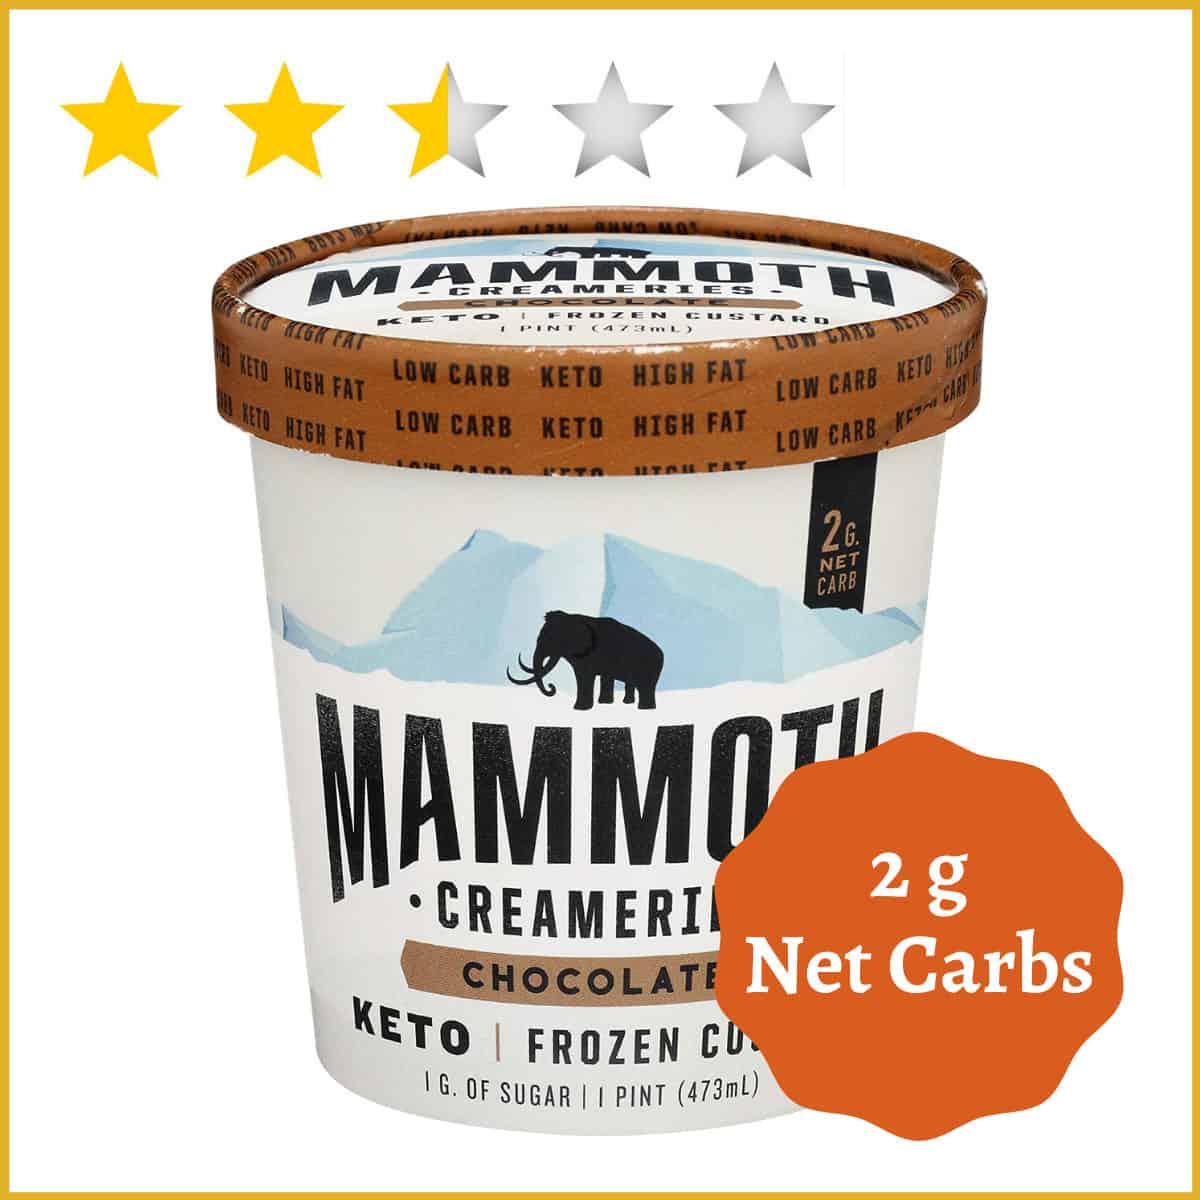 Mammoth Creameries